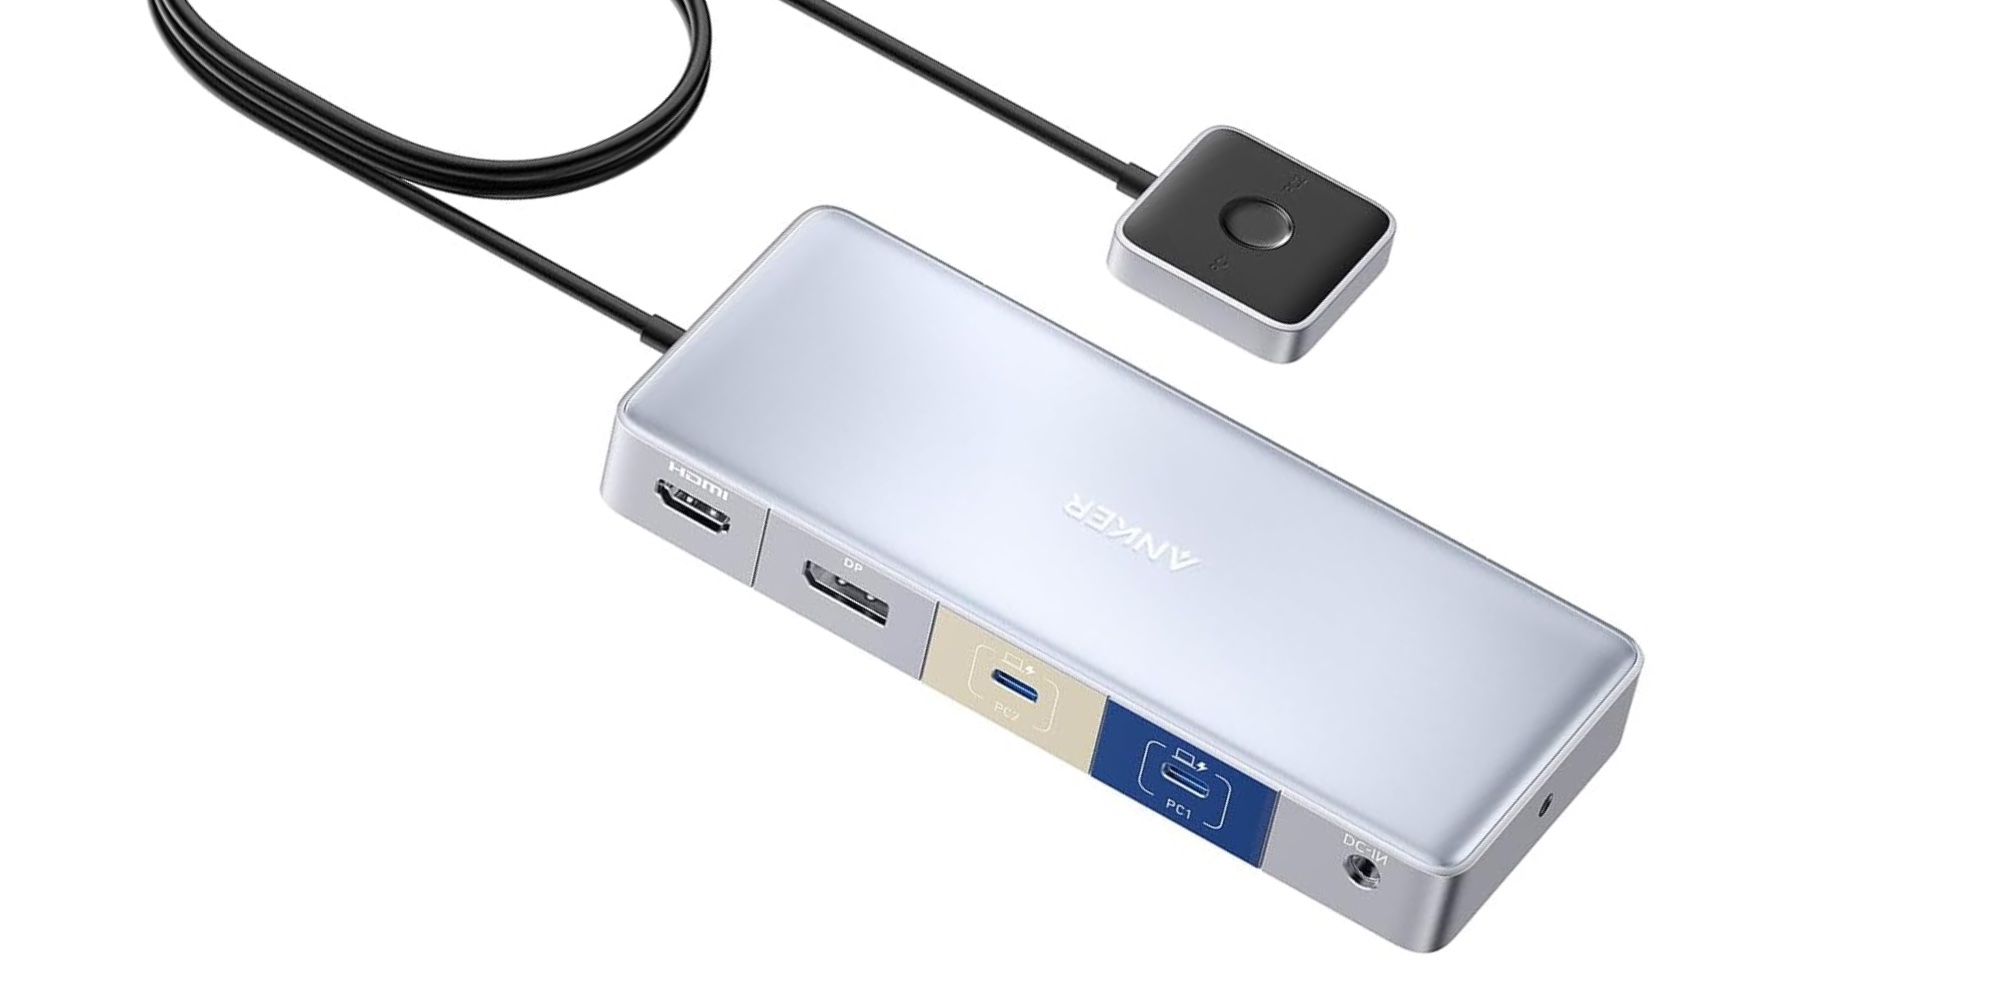 Anker 364 USB-C Hub (10-in-1, Dual 4K HDMI)